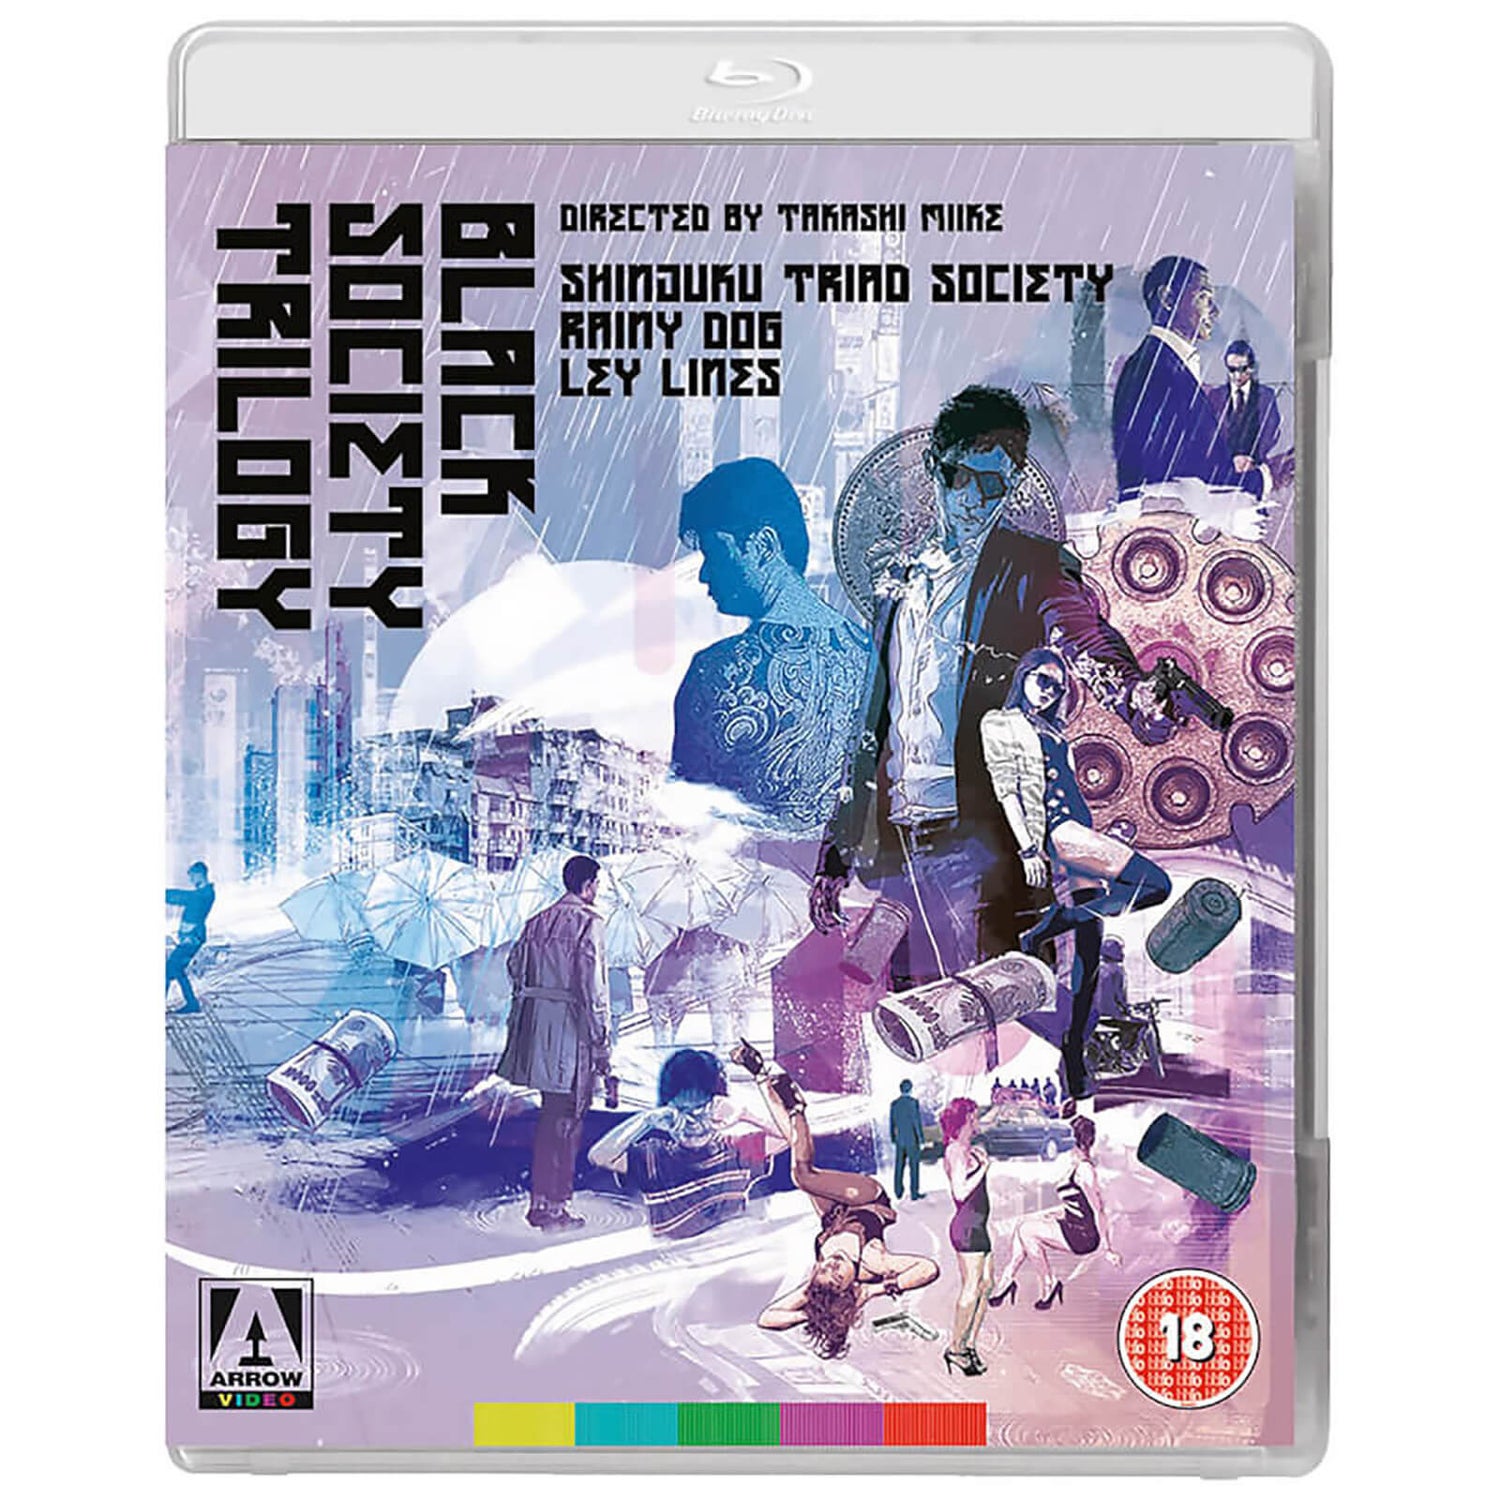 The Black Society Trilogy Blu-ray